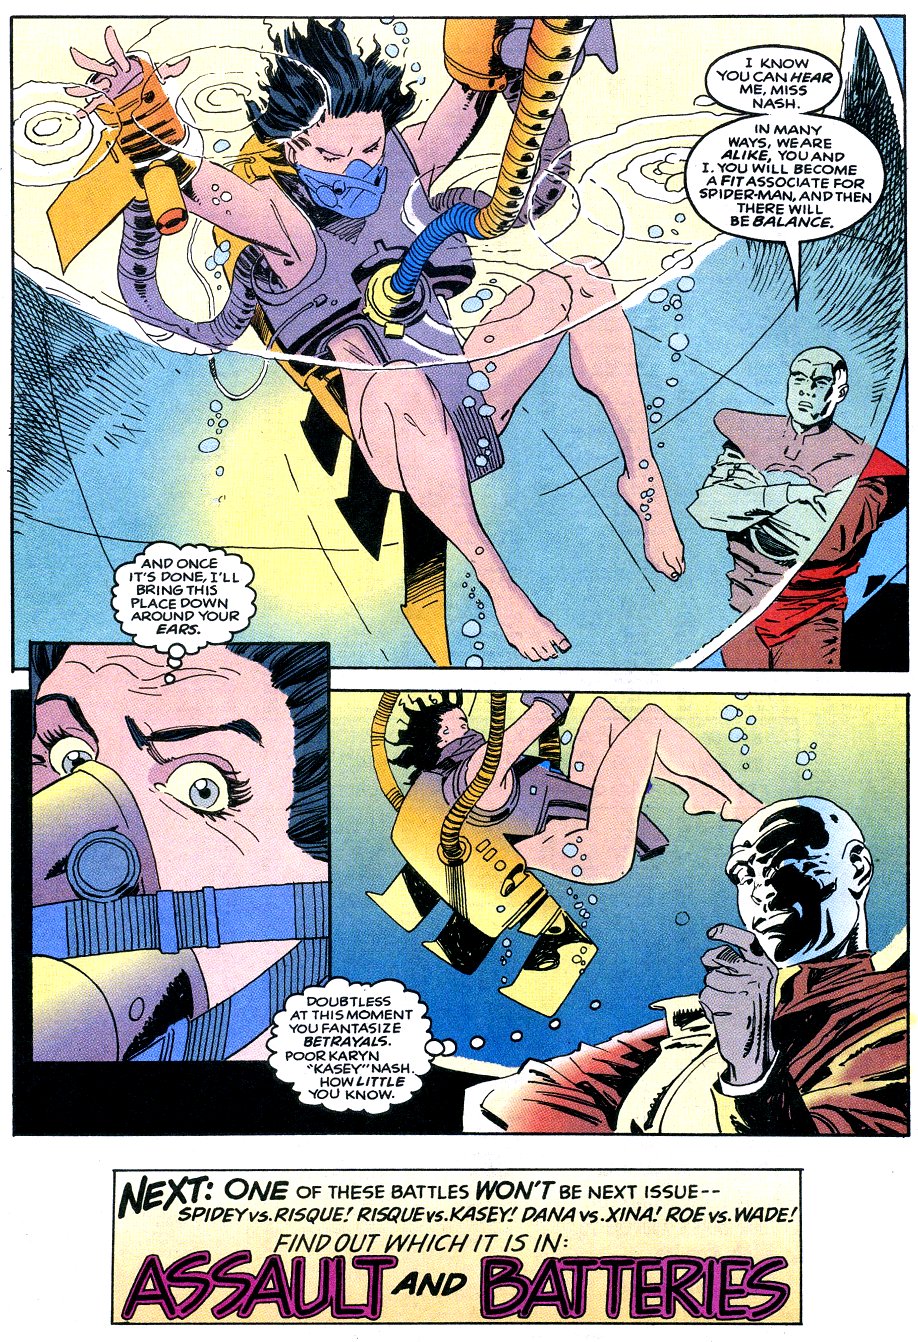 Spider-Man 2099 (1992) issue 23 - Page 17